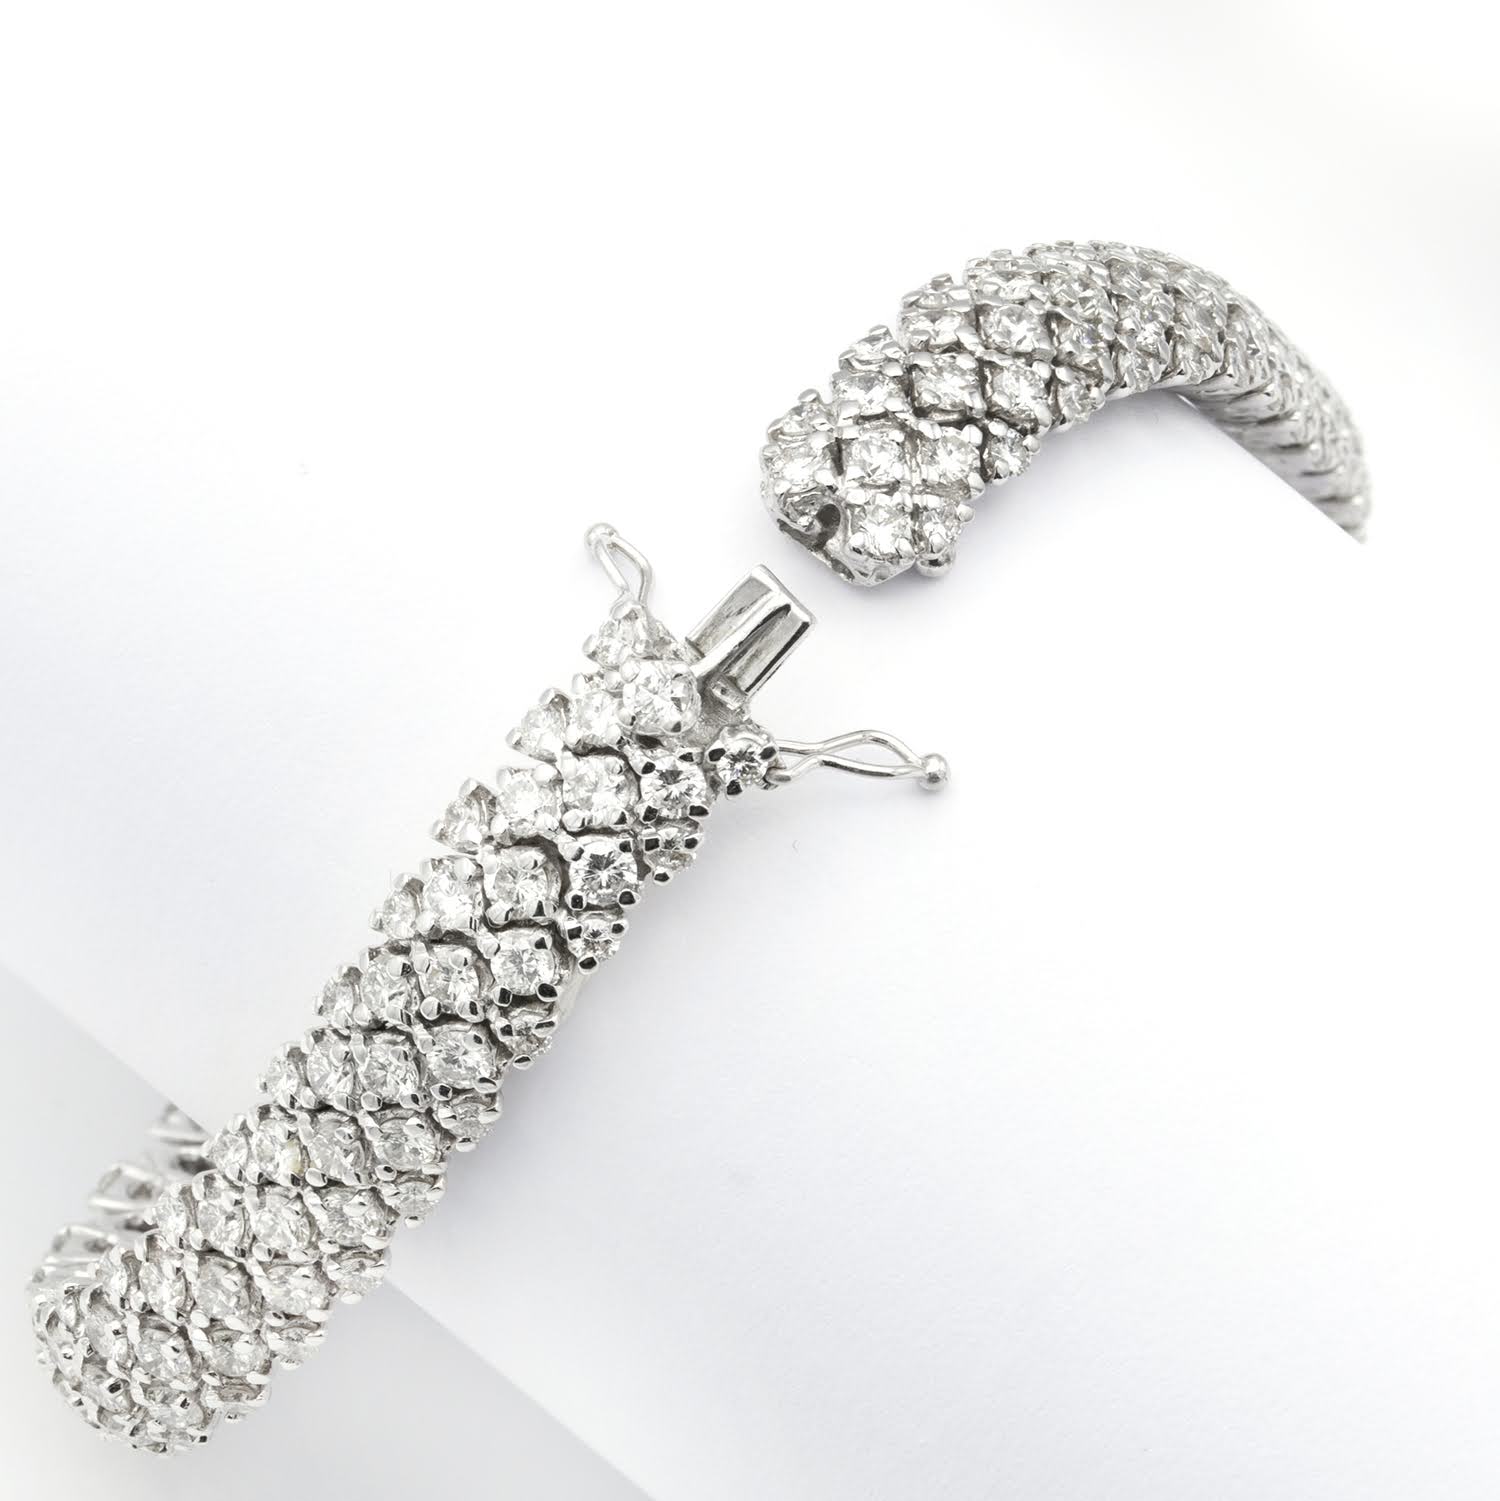 Braided Round Brilliants 12.21ct Bracelet – New York Collection